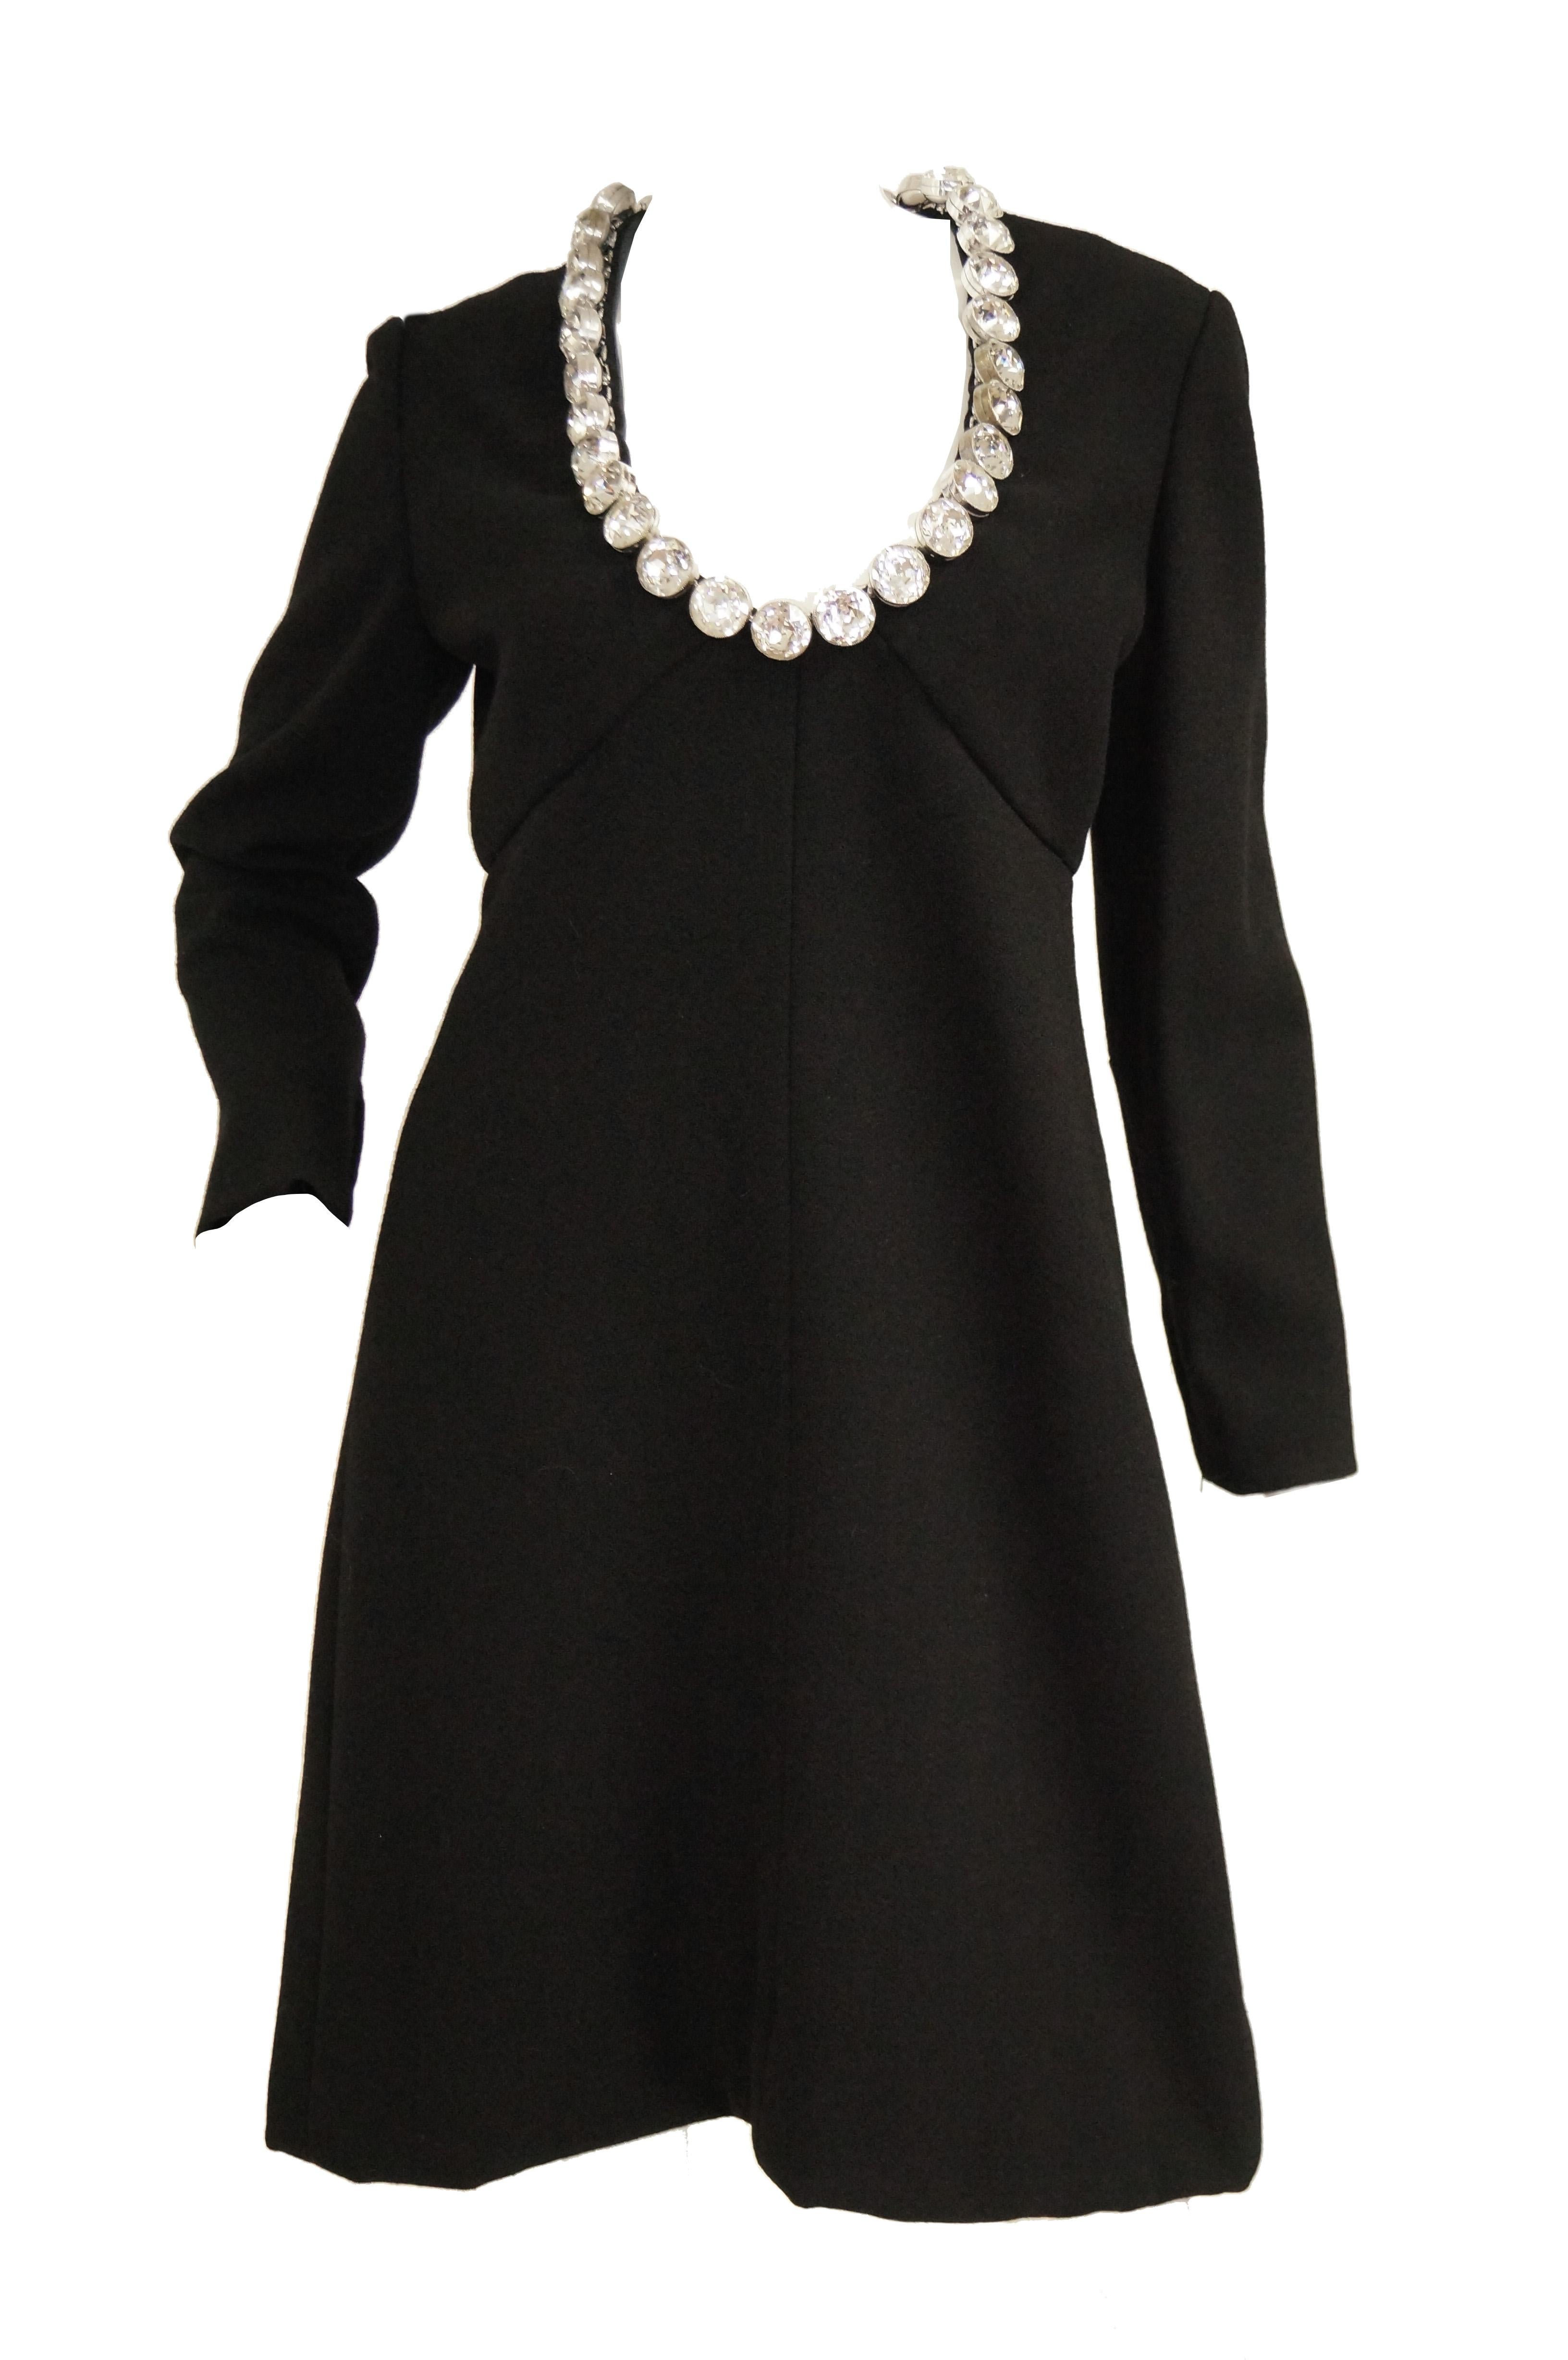 Women's 1960s Donald Brooks Black Cocktail Dress with Riviera Rhinestone Neckline For Sale